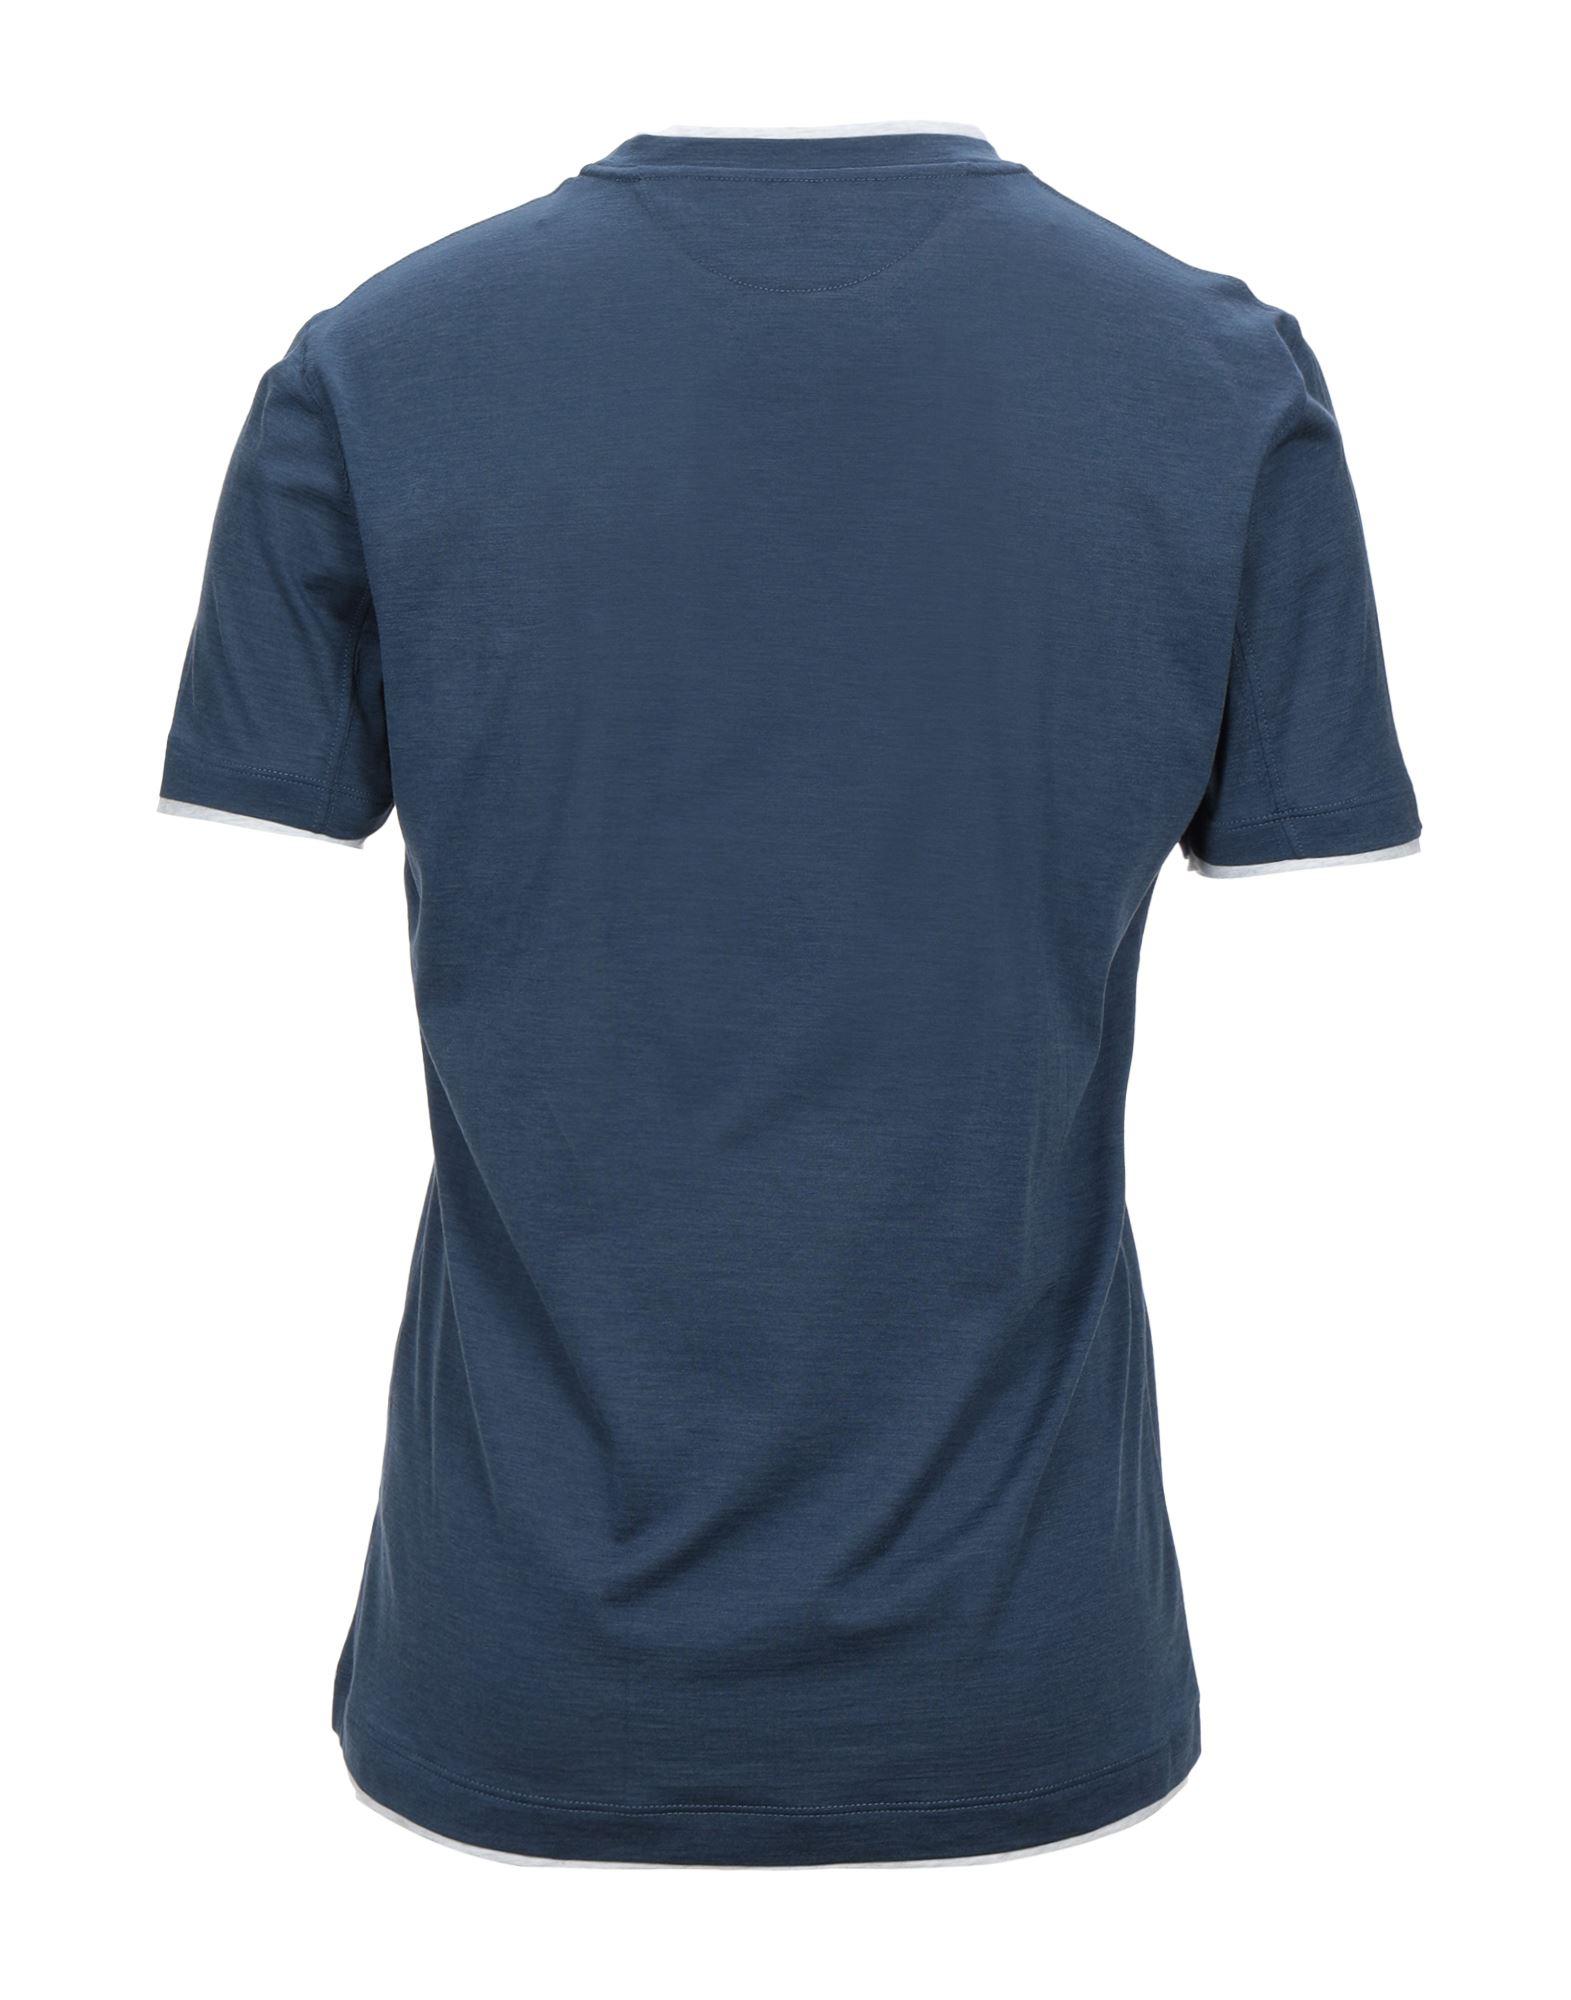 Brunello Cucinelli Silk T-shirt in Slate Blue (Blue) for Men - Lyst